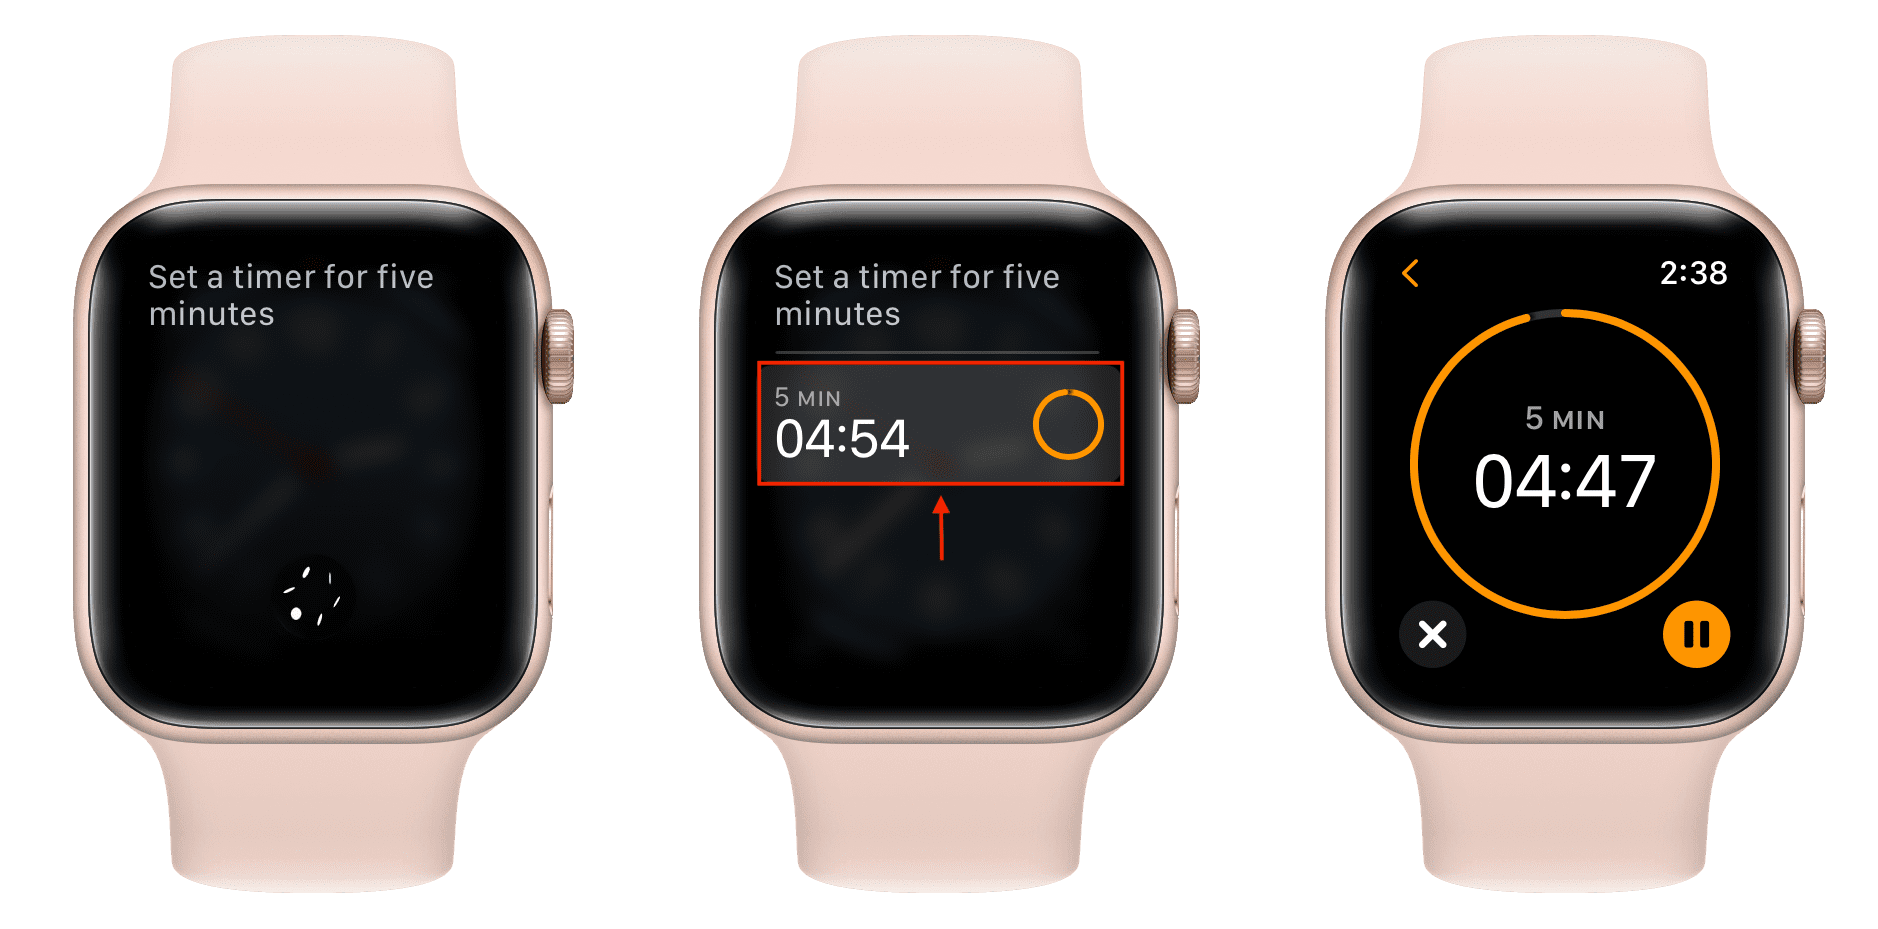 Set timer on Apple Watch using Siri